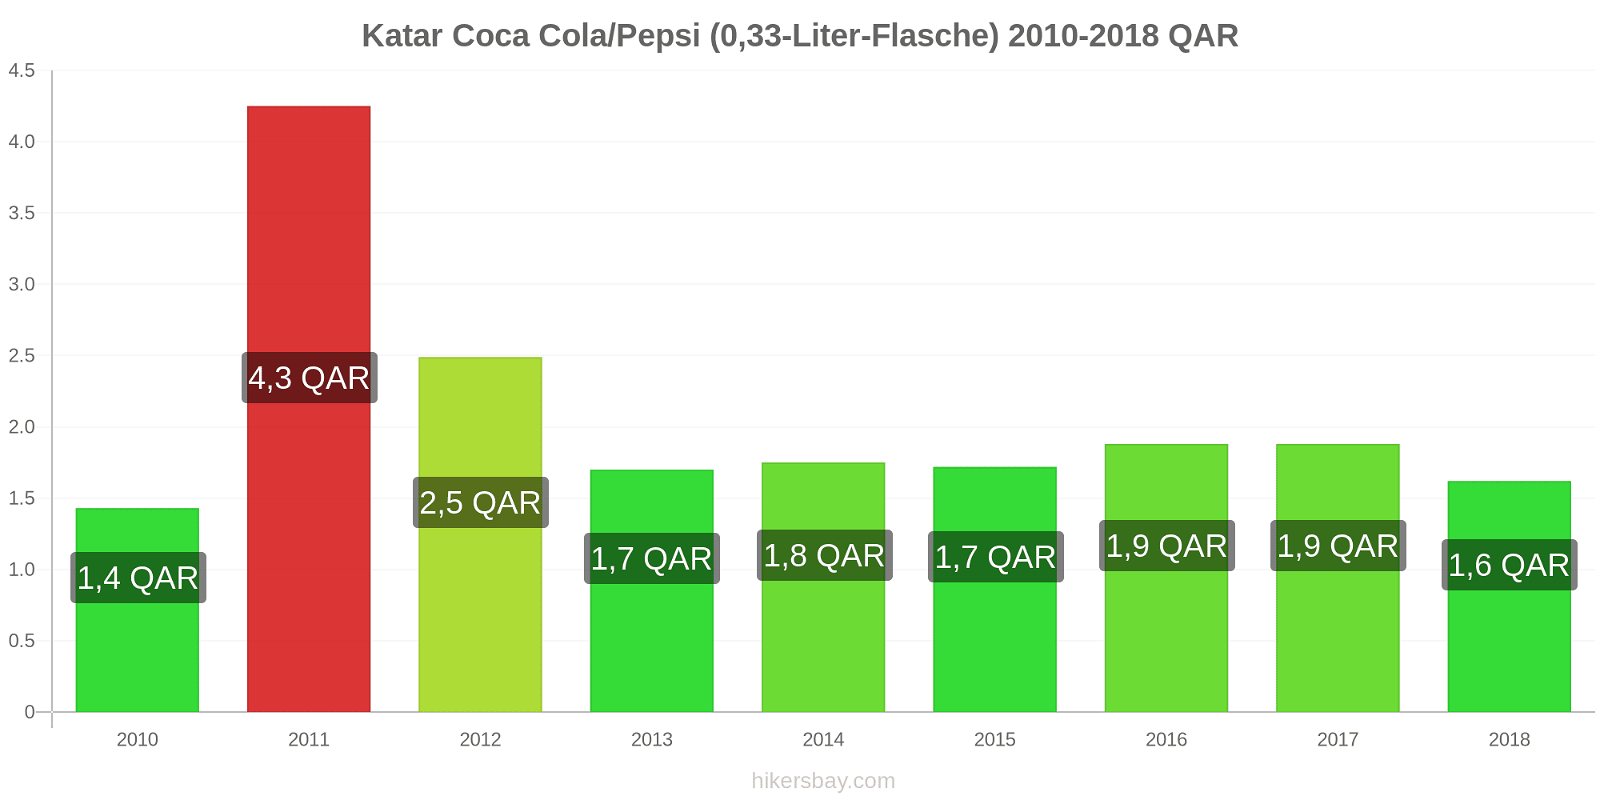 Katar Preisänderungen Coke/Pepsi (0,33-Liter-Flasche) hikersbay.com